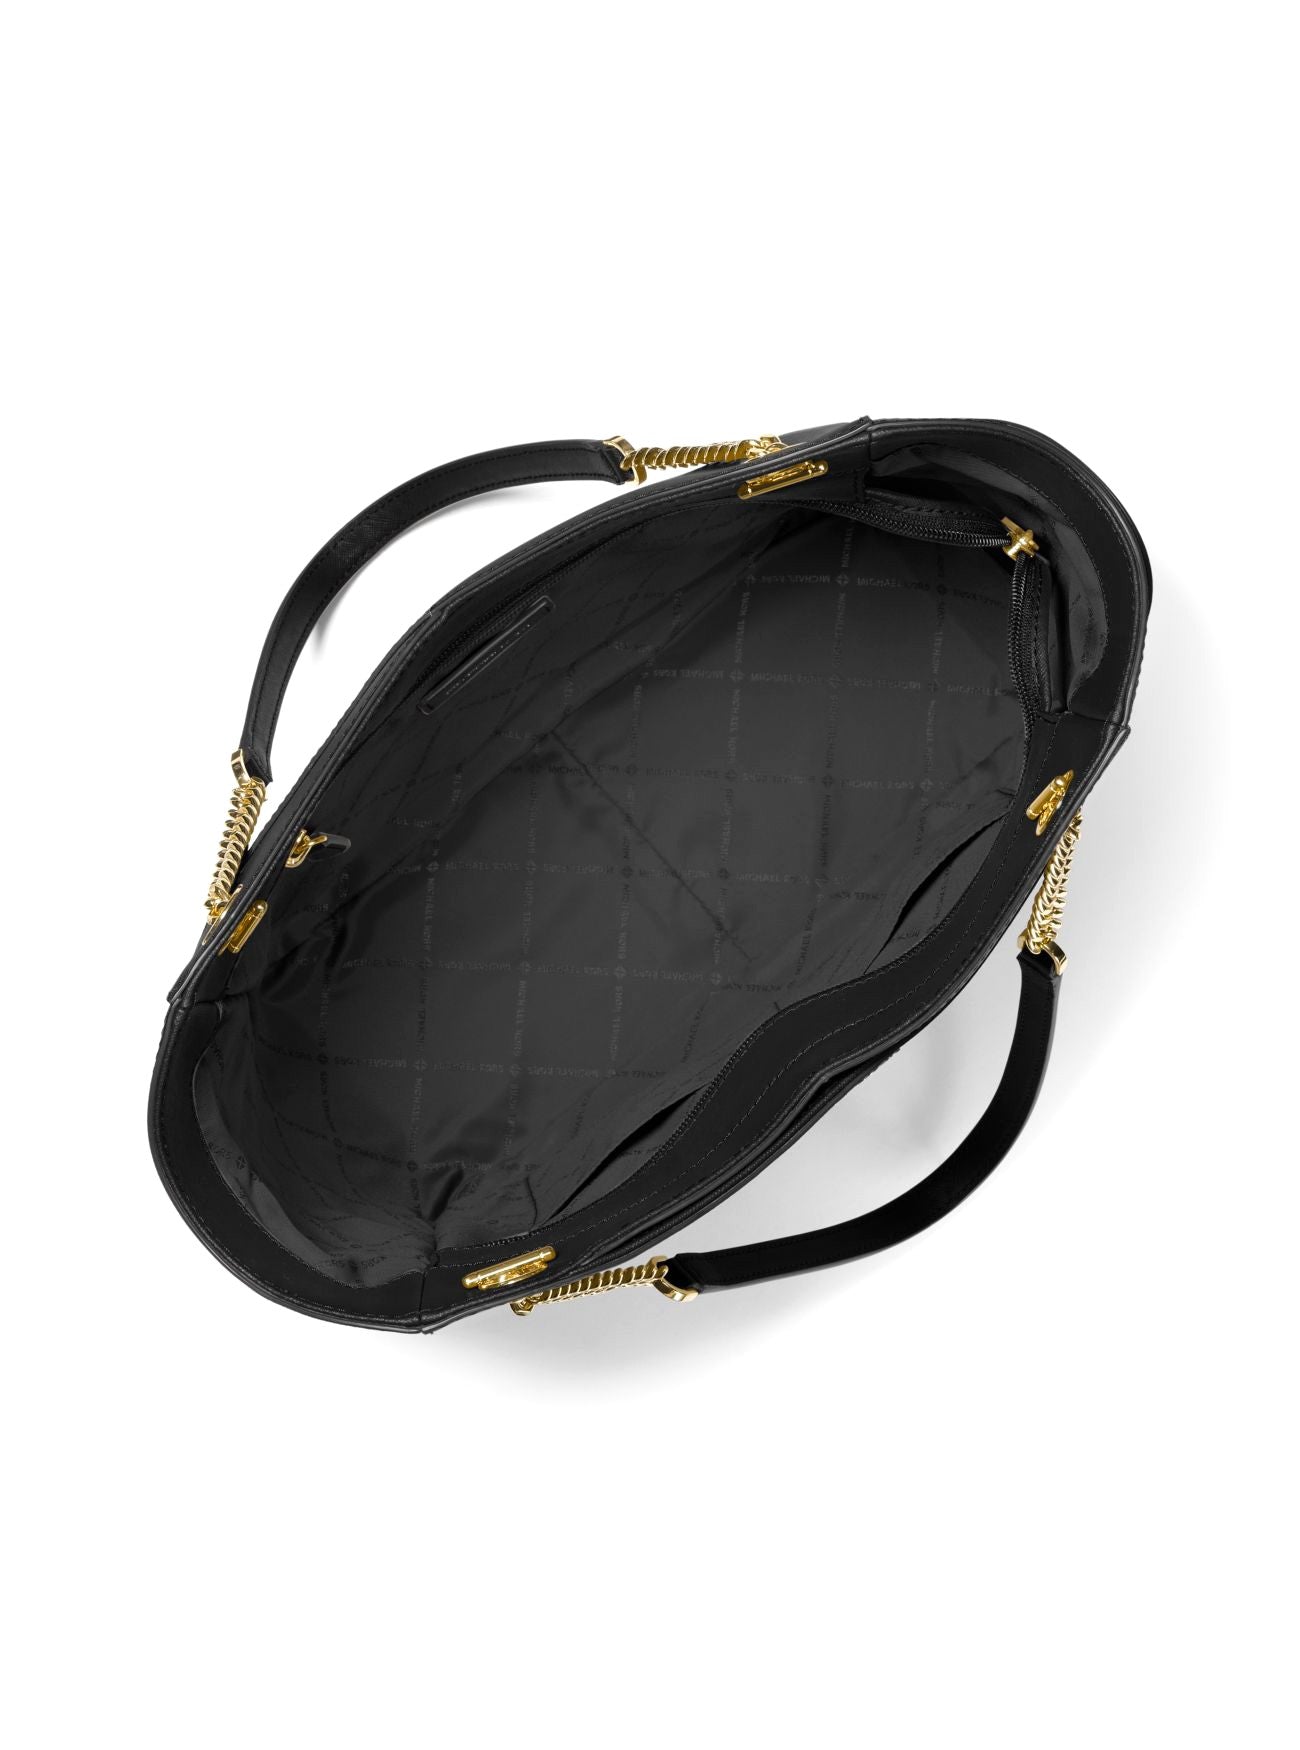 Michael Kors Jet Set Large Saffiano Leather Shoulder Bag– Ruumur